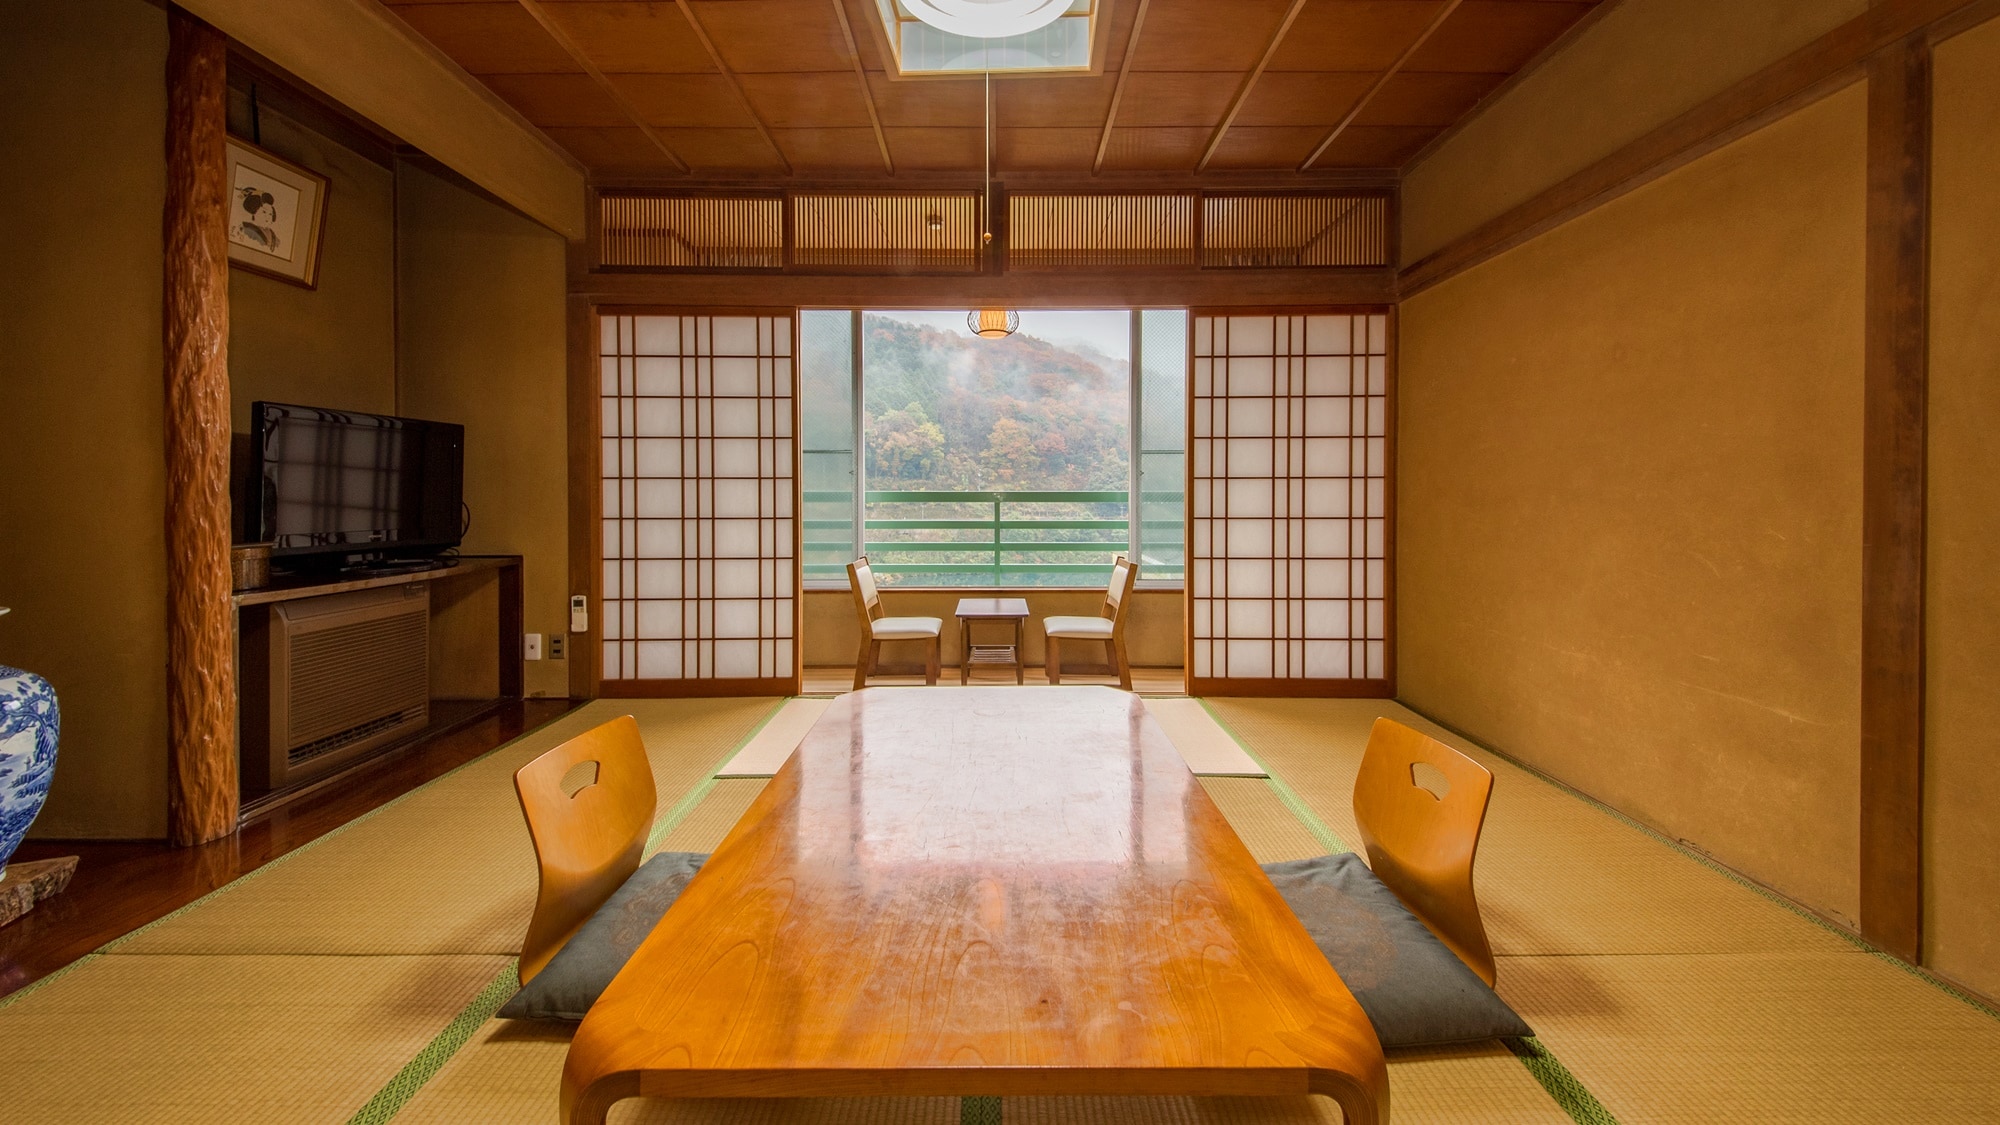 * [Kamar] Ini adalah contoh kamar bergaya Jepang dengan 8 tikar tatami. Nikmati pemandangan luar di ruang tatami yang menenangkan.